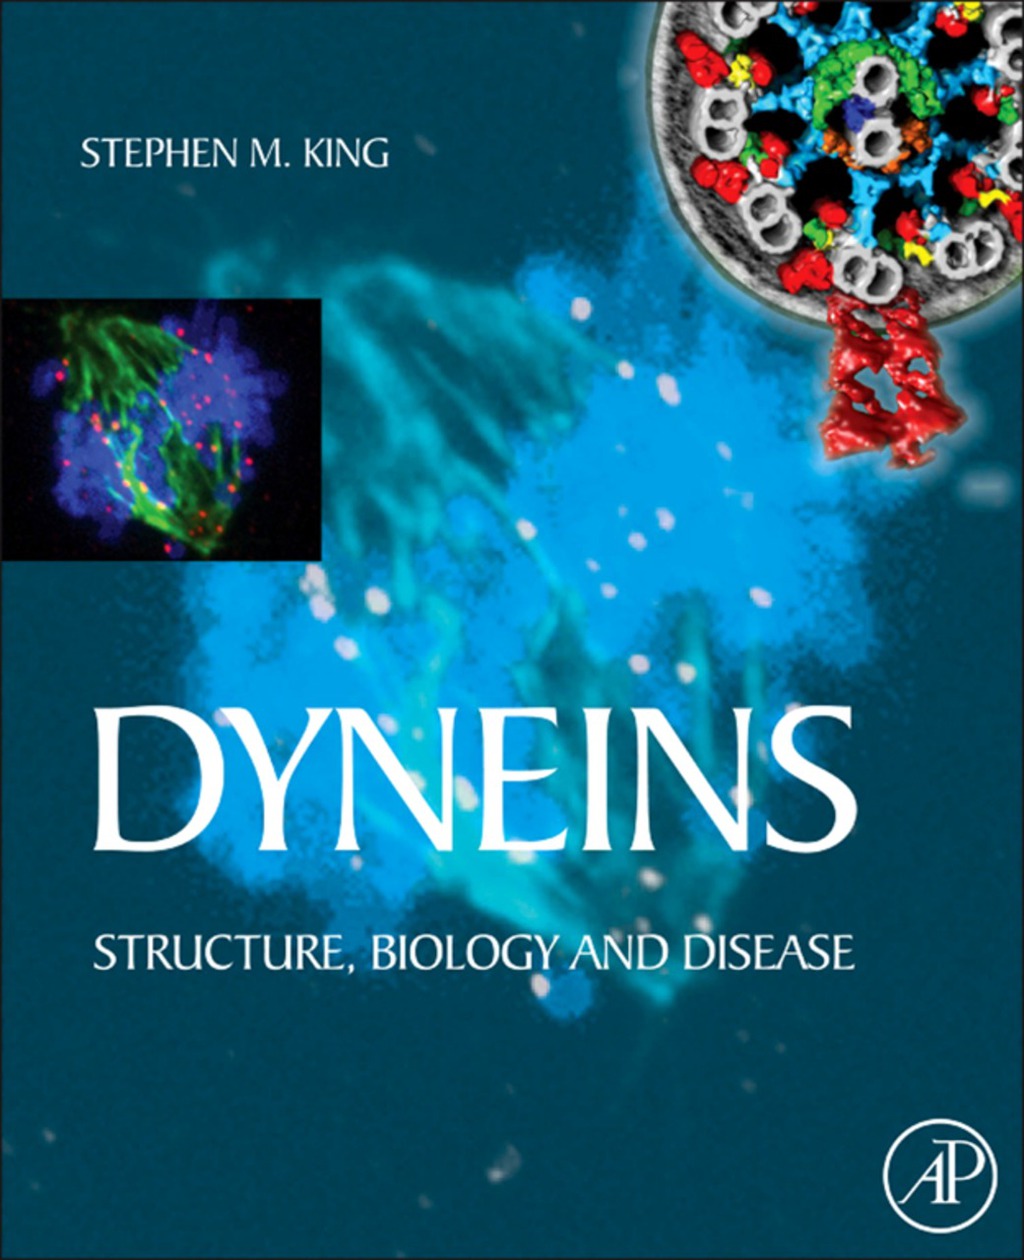 Dyneins (eBook) - Stephen M. King,